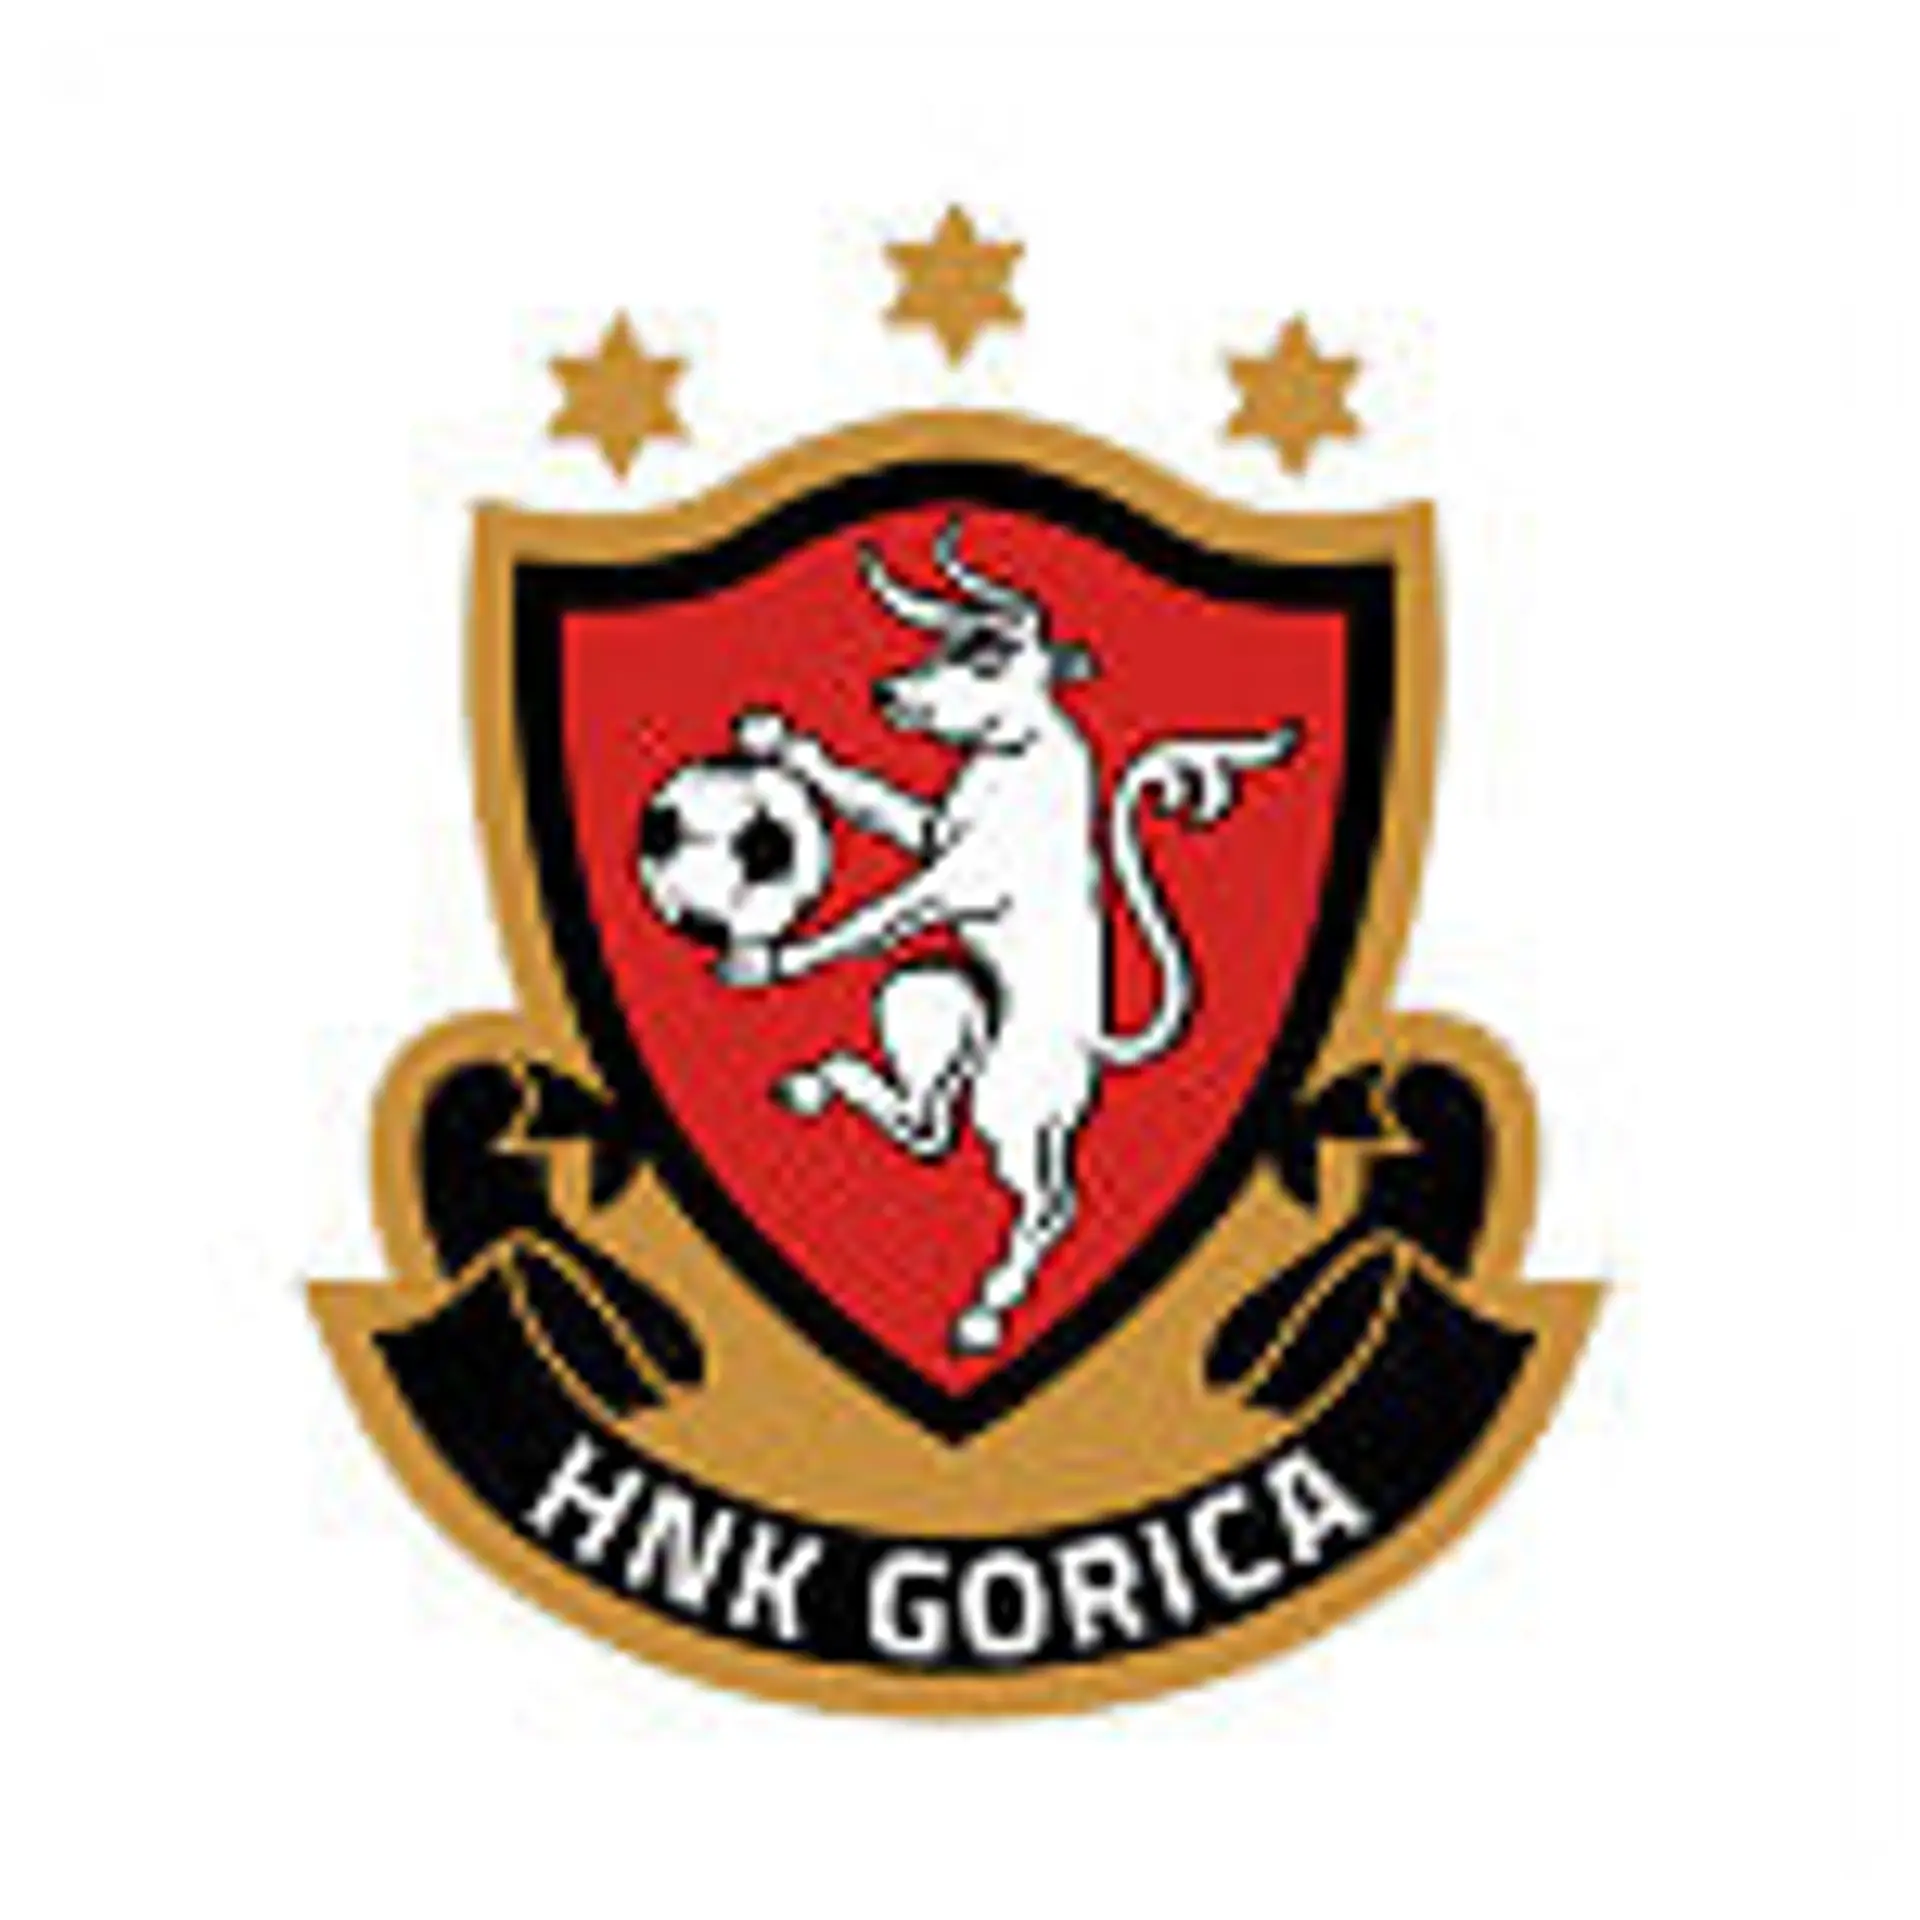 Croatian First League, HNK Gorica - HNK Rijeka 26.09.2021